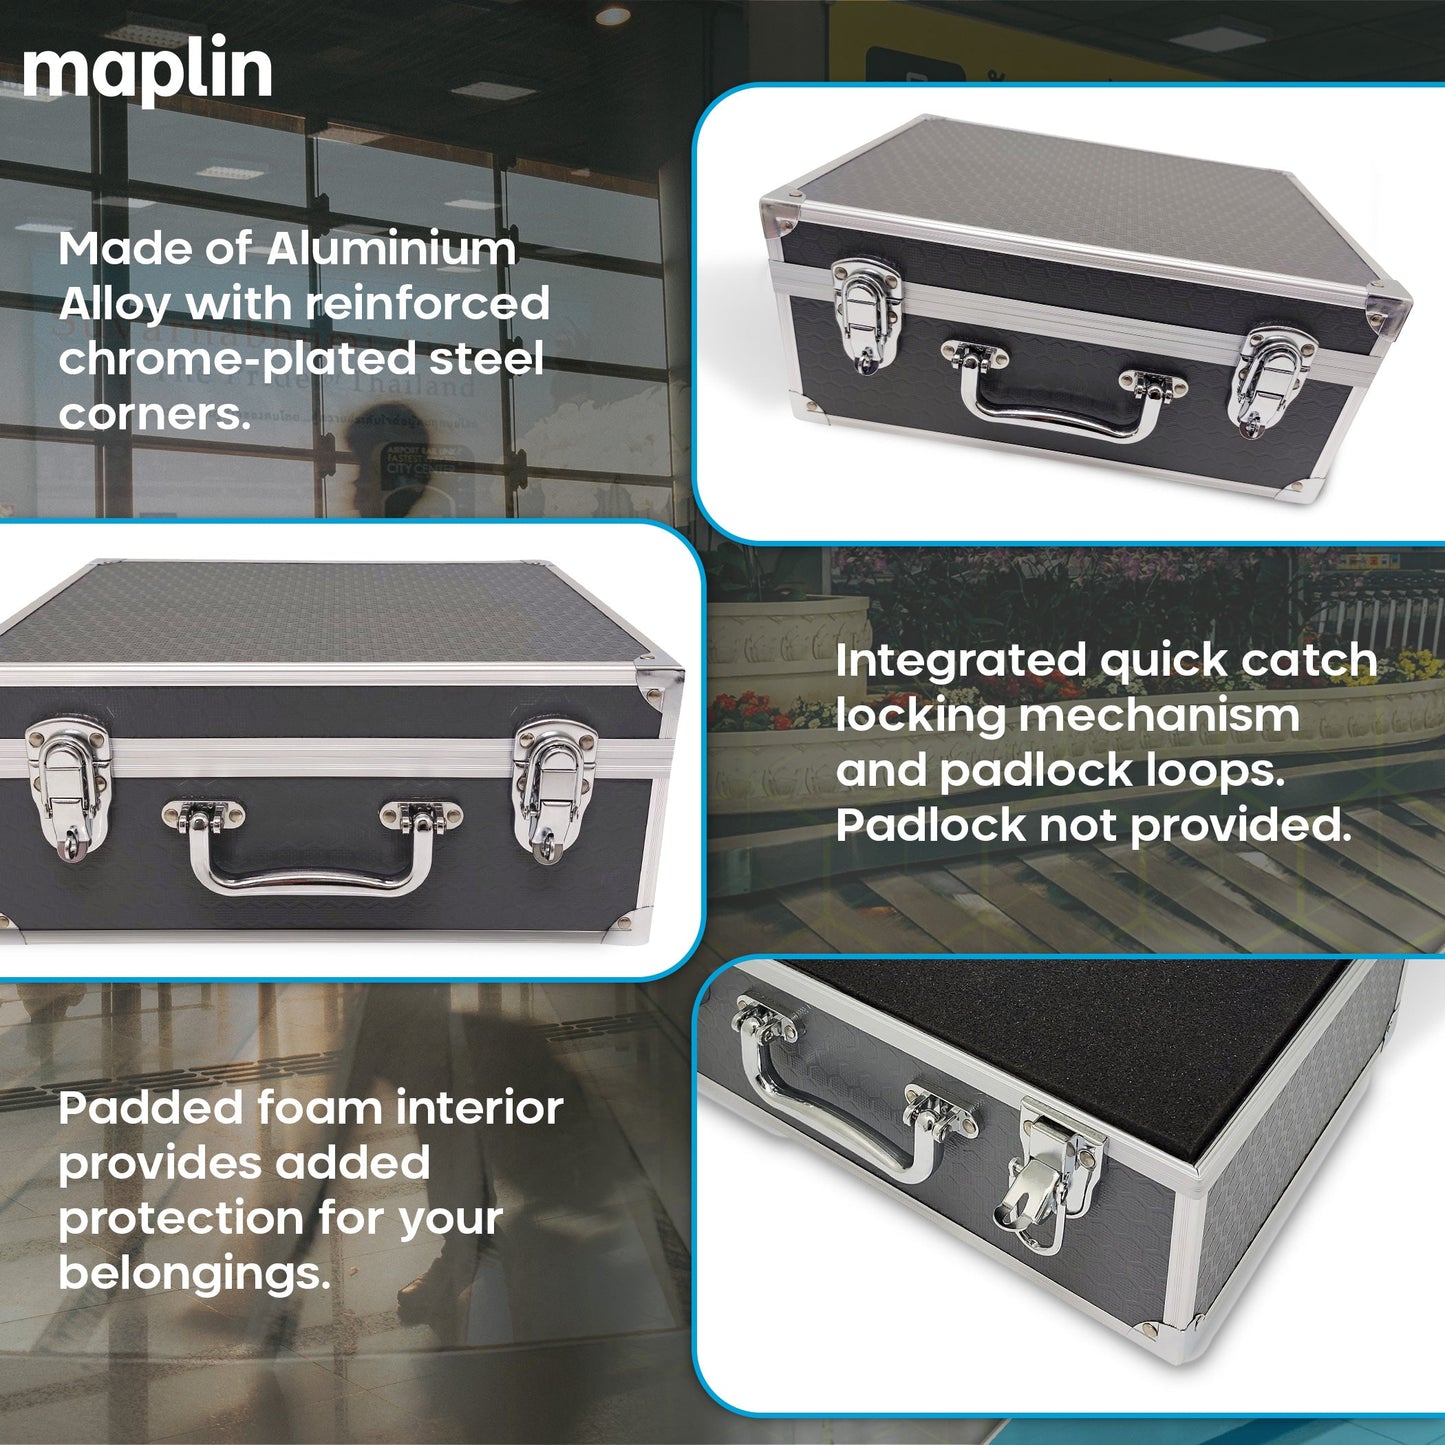 Maplin Plus Aluminium 130 x 310 x 240mm Flight Case - Grey - maplin.co.uk